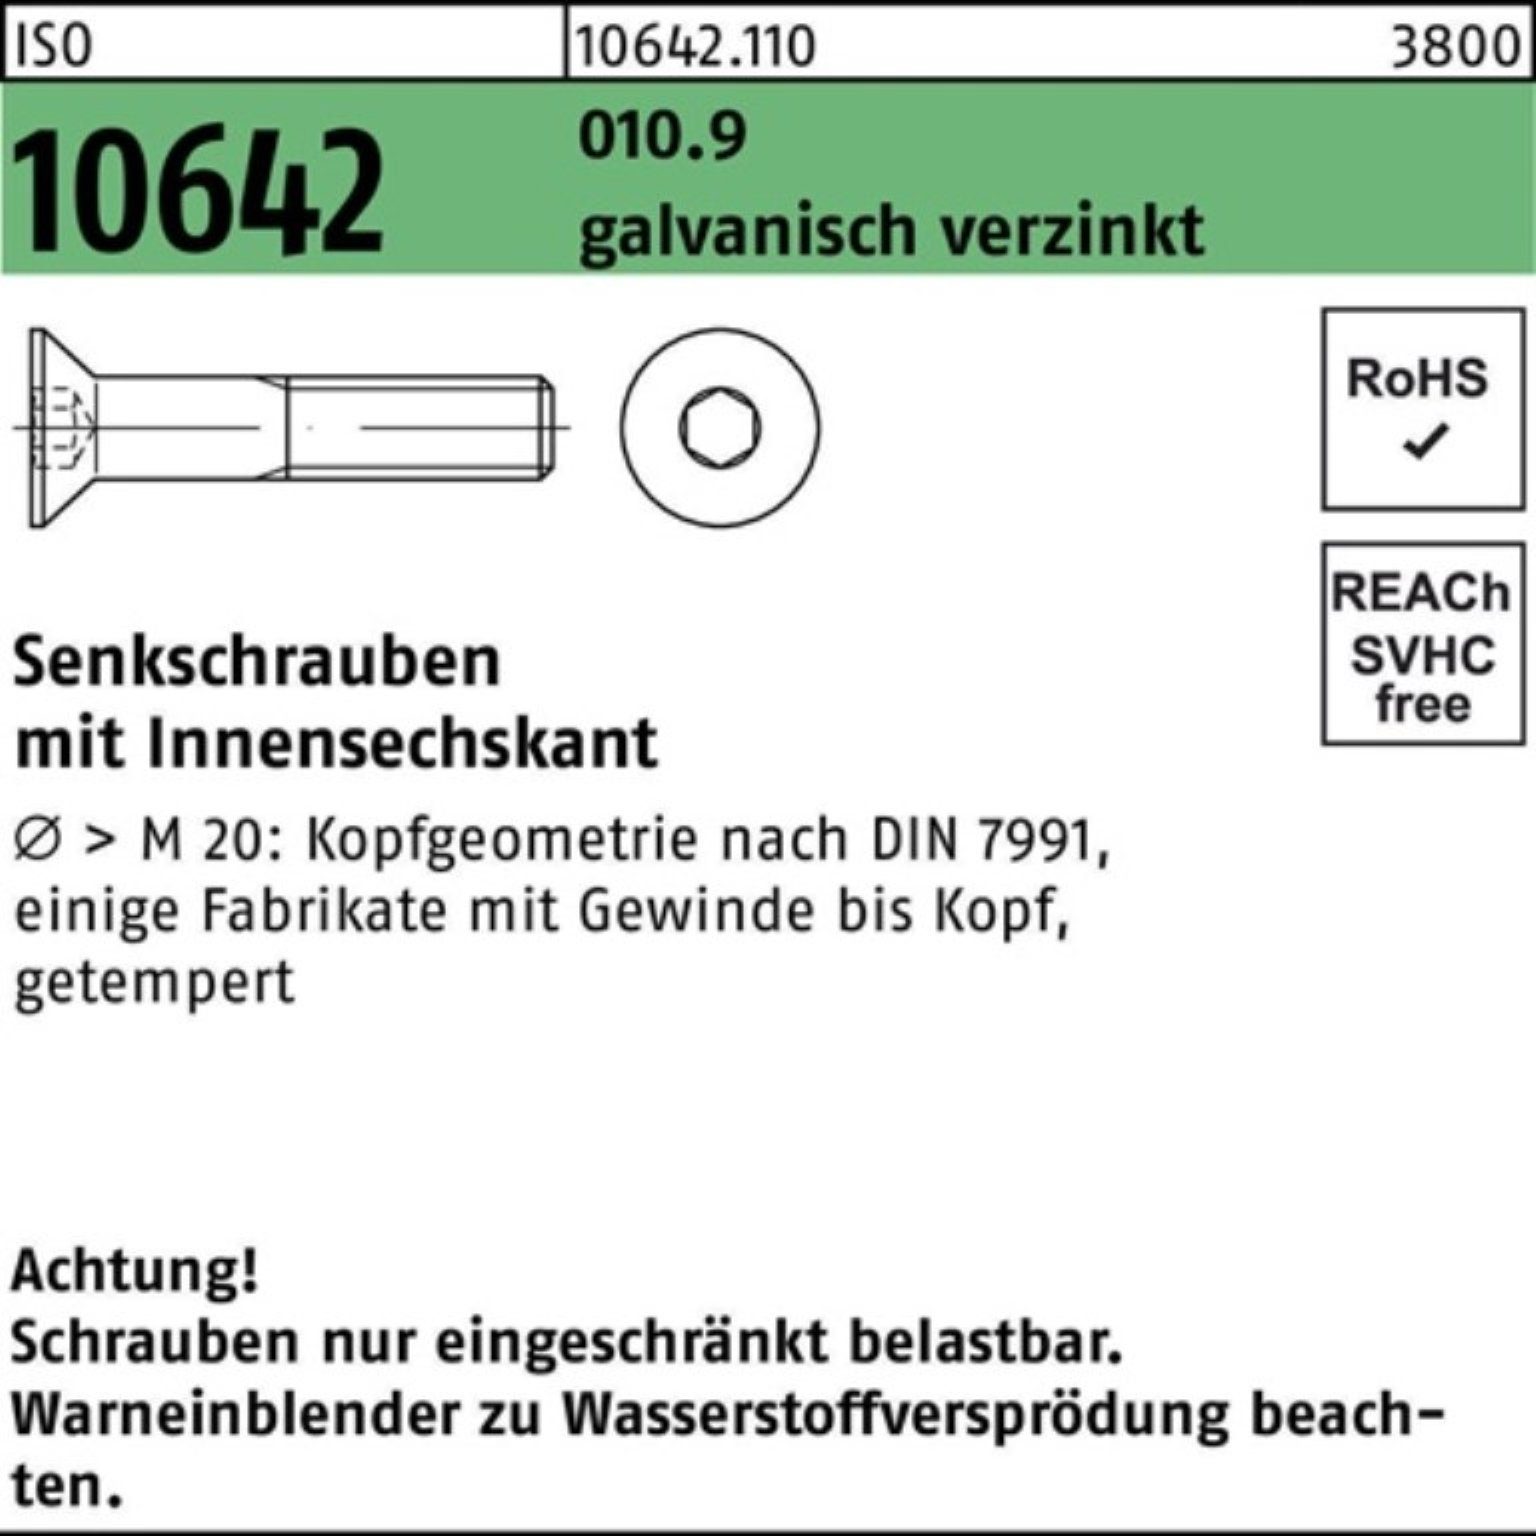 M6x Pack 20 50 Senkschraube Senkschraube ISO Reyher 010.9 galv.verz. 10642 200er Innen-6kt